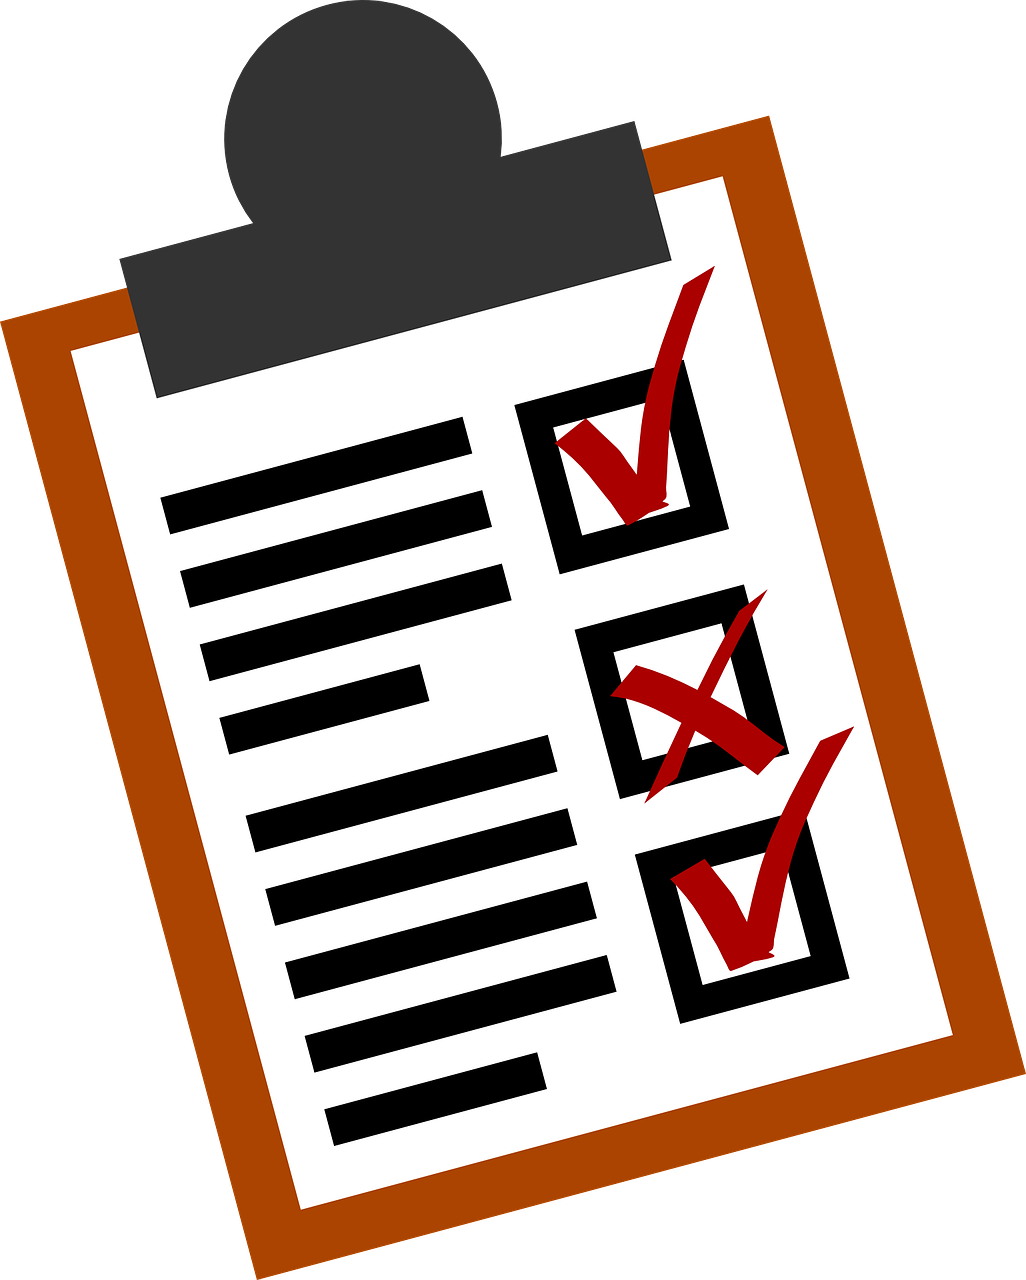  ways online survey. Organized clipart daily checklist